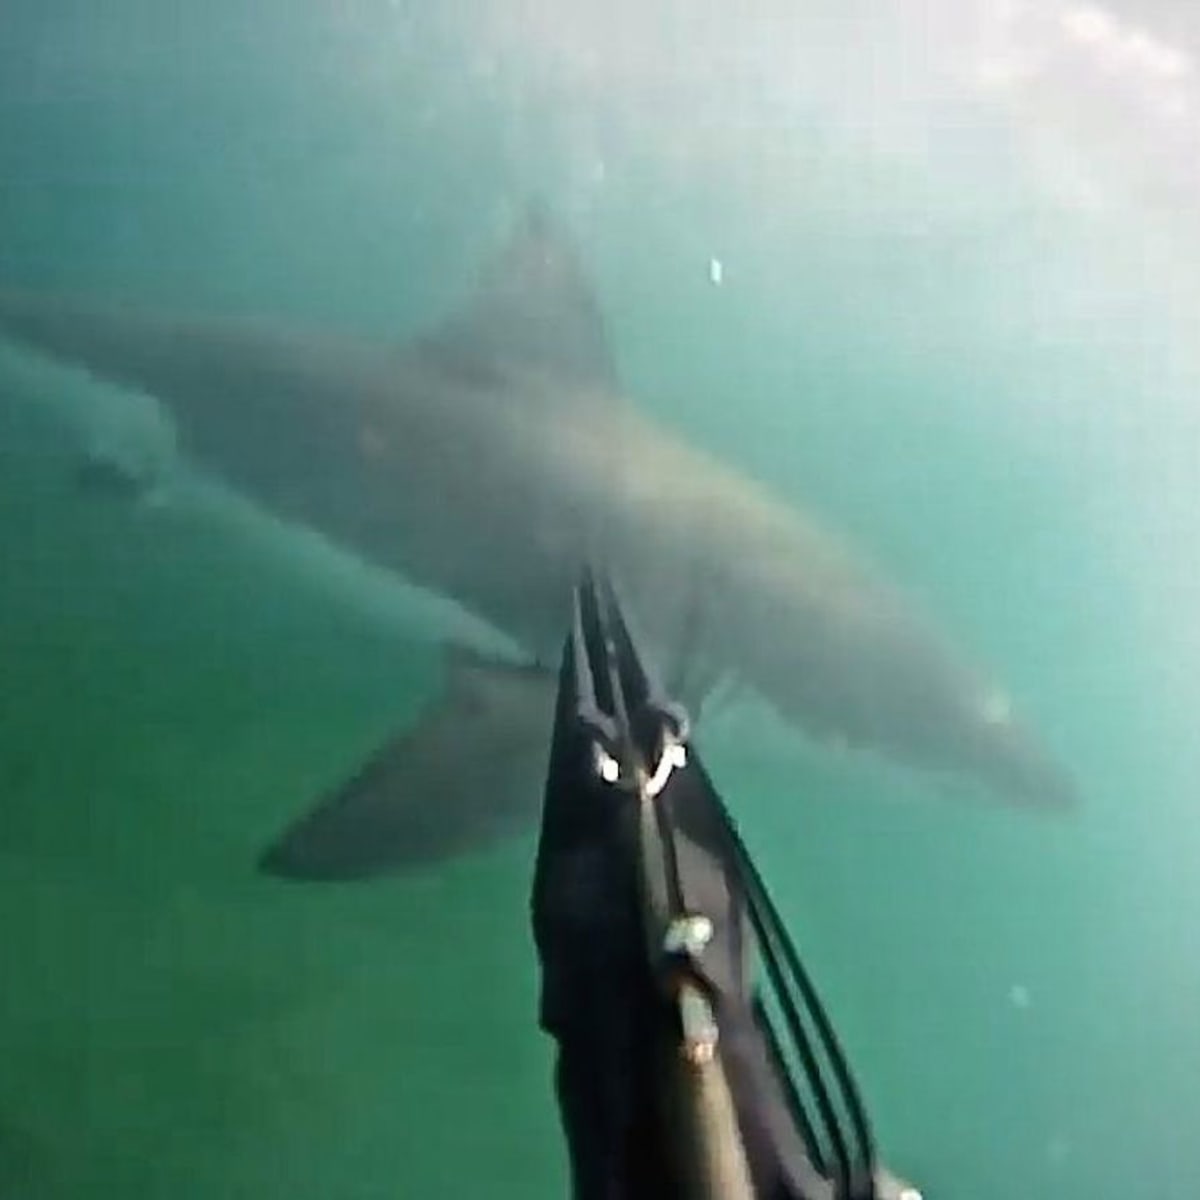 New fishing rules aims at curbing great white shark hunting